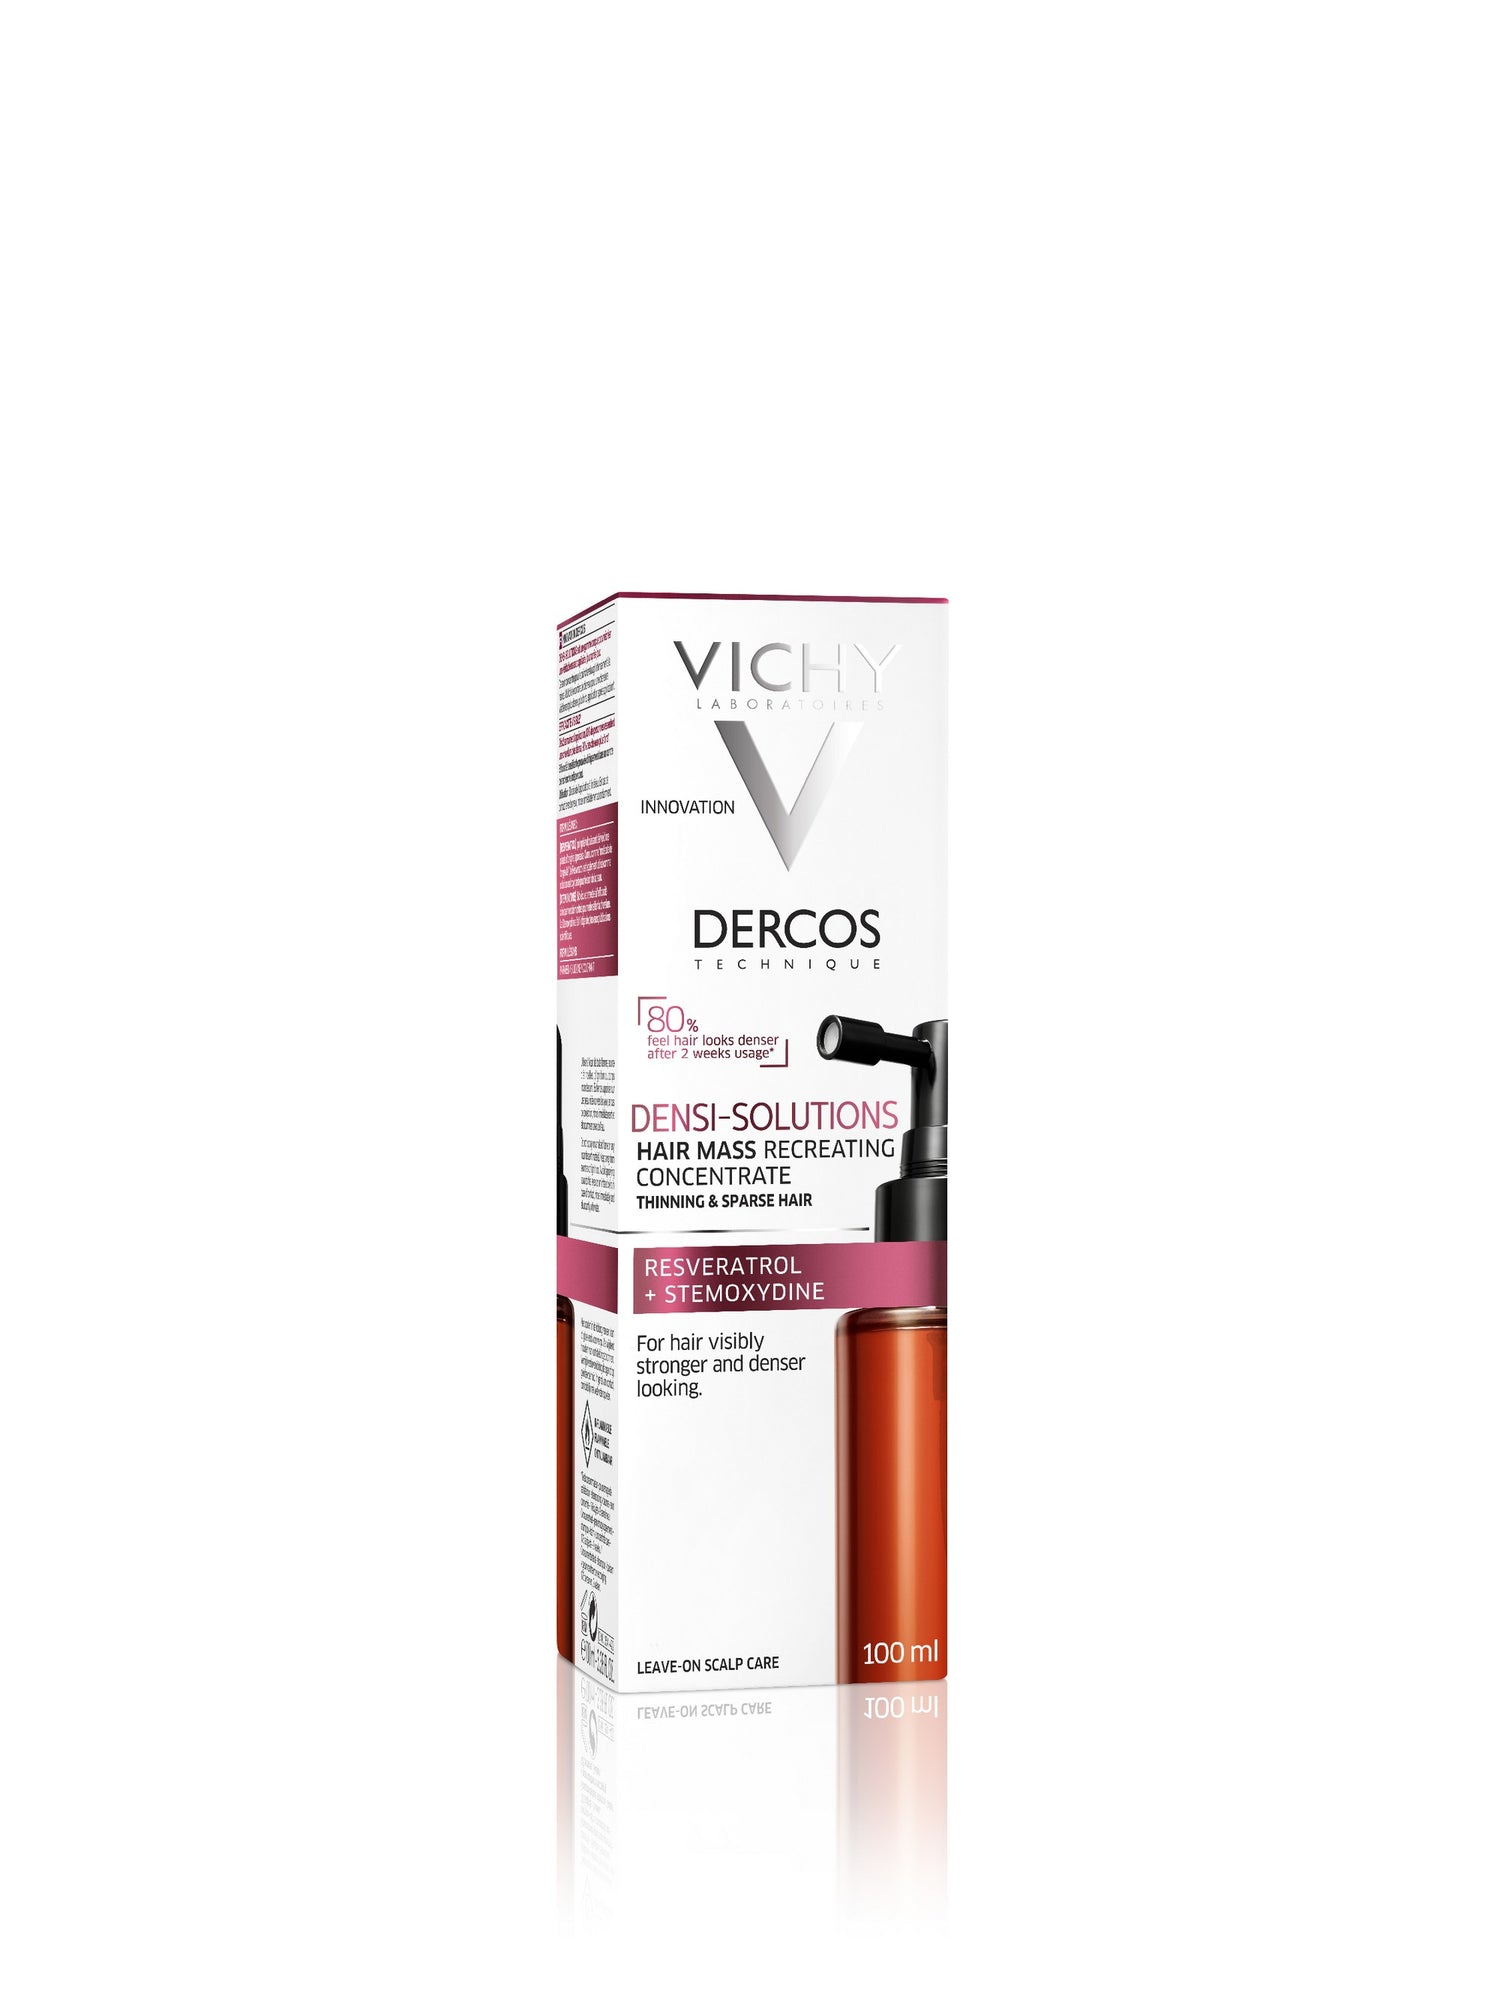 Vichy Dercos Hair Mass Concentrate 100ml Packshot